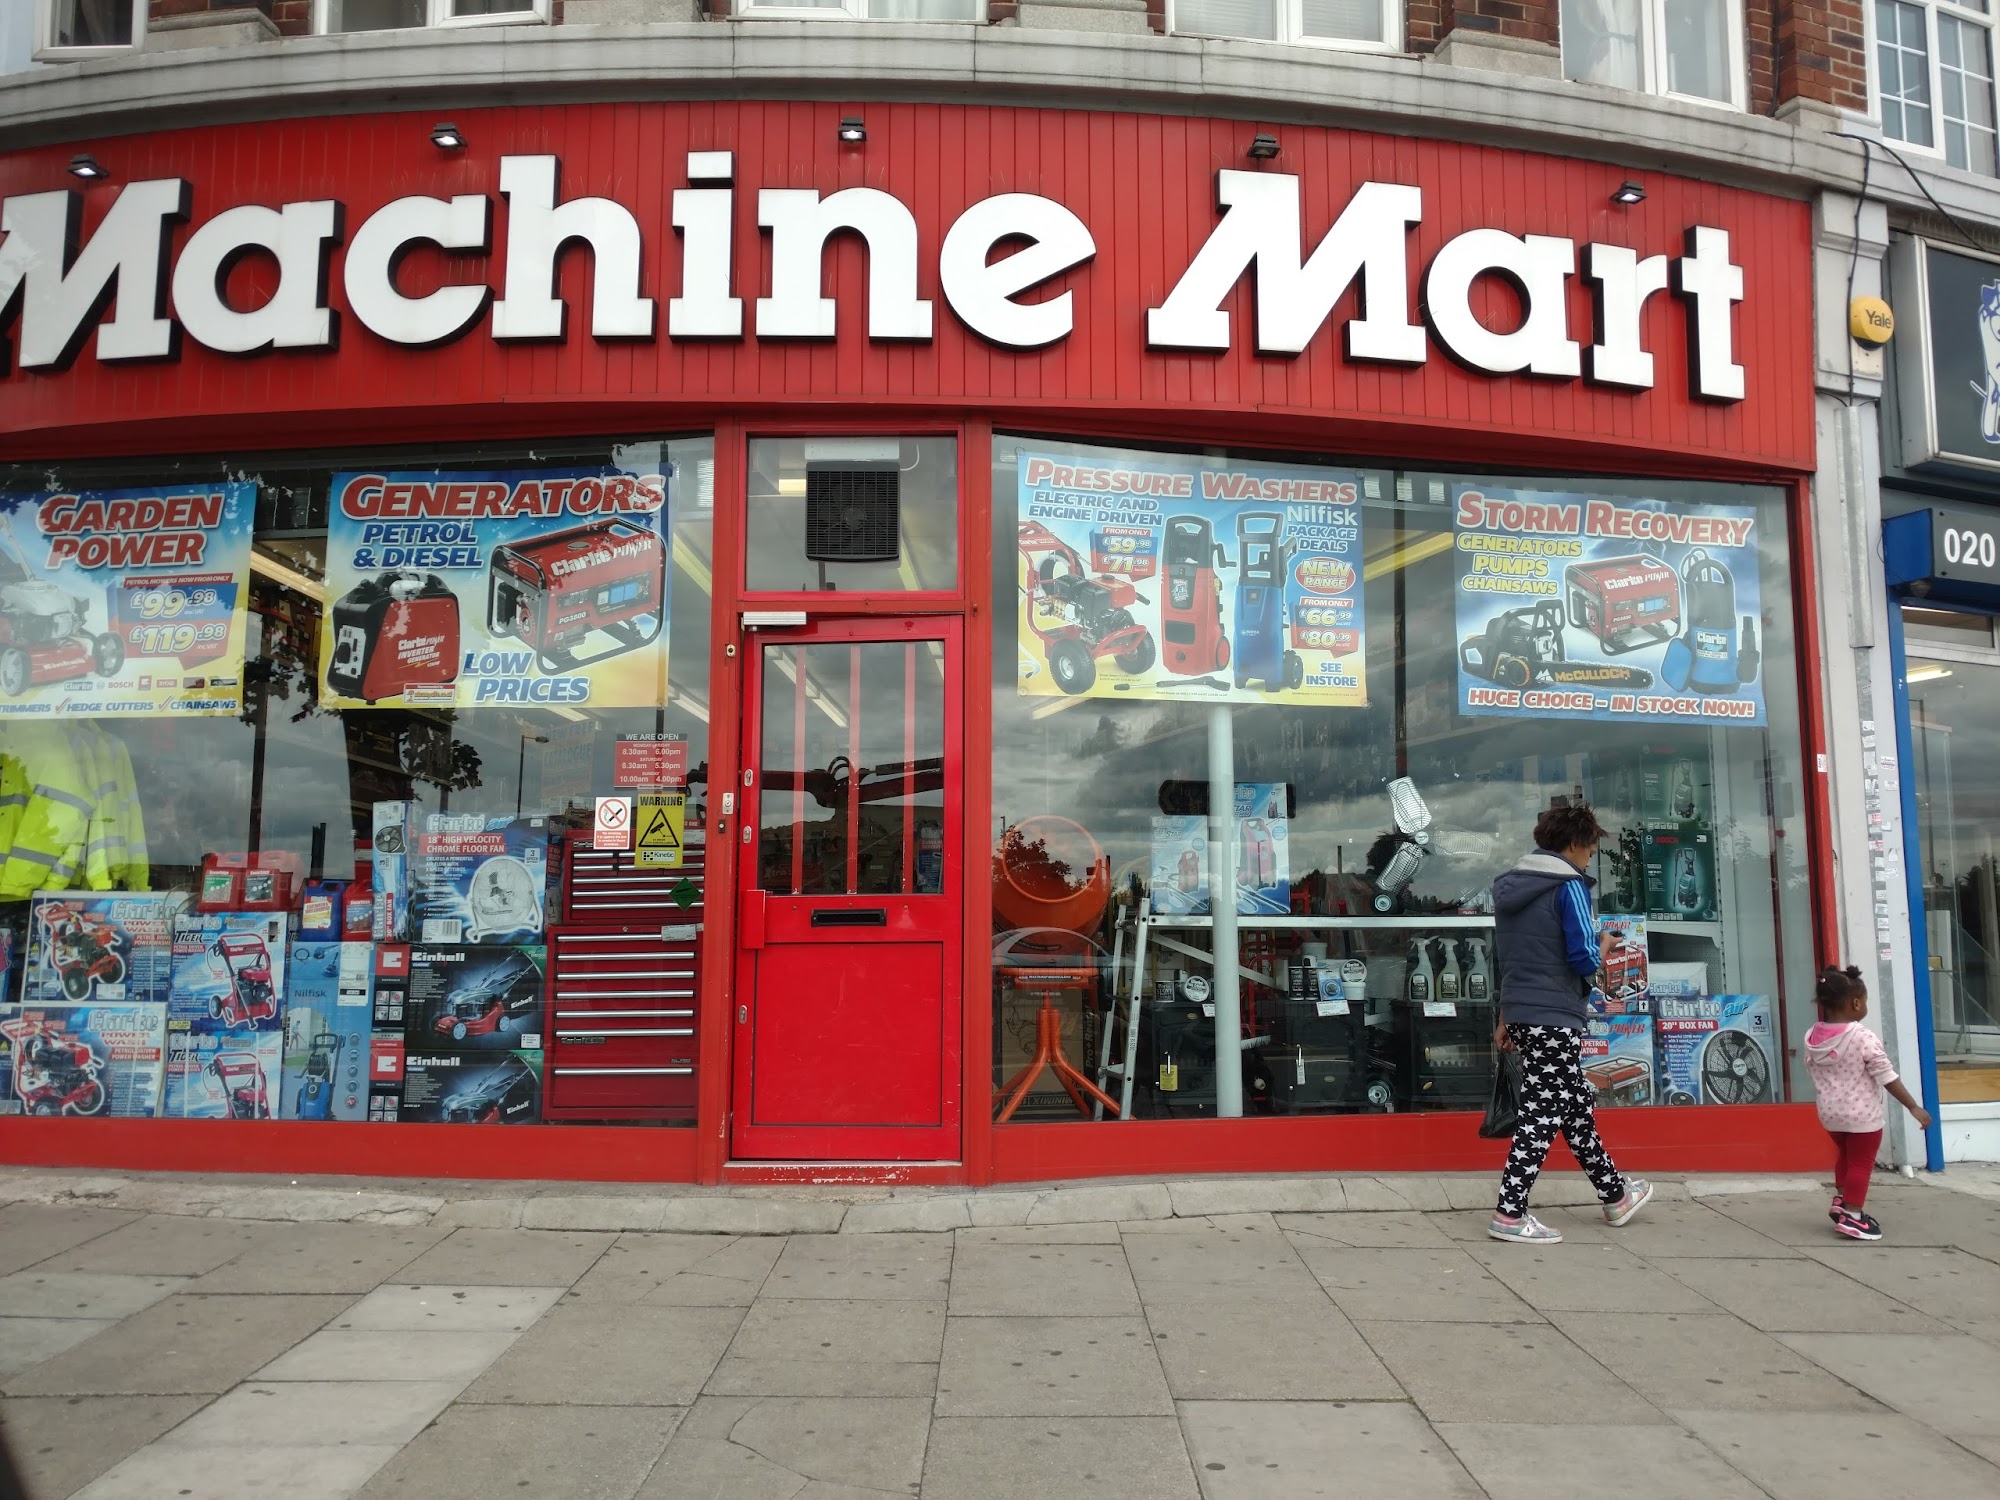 Machine Mart London Edmonton